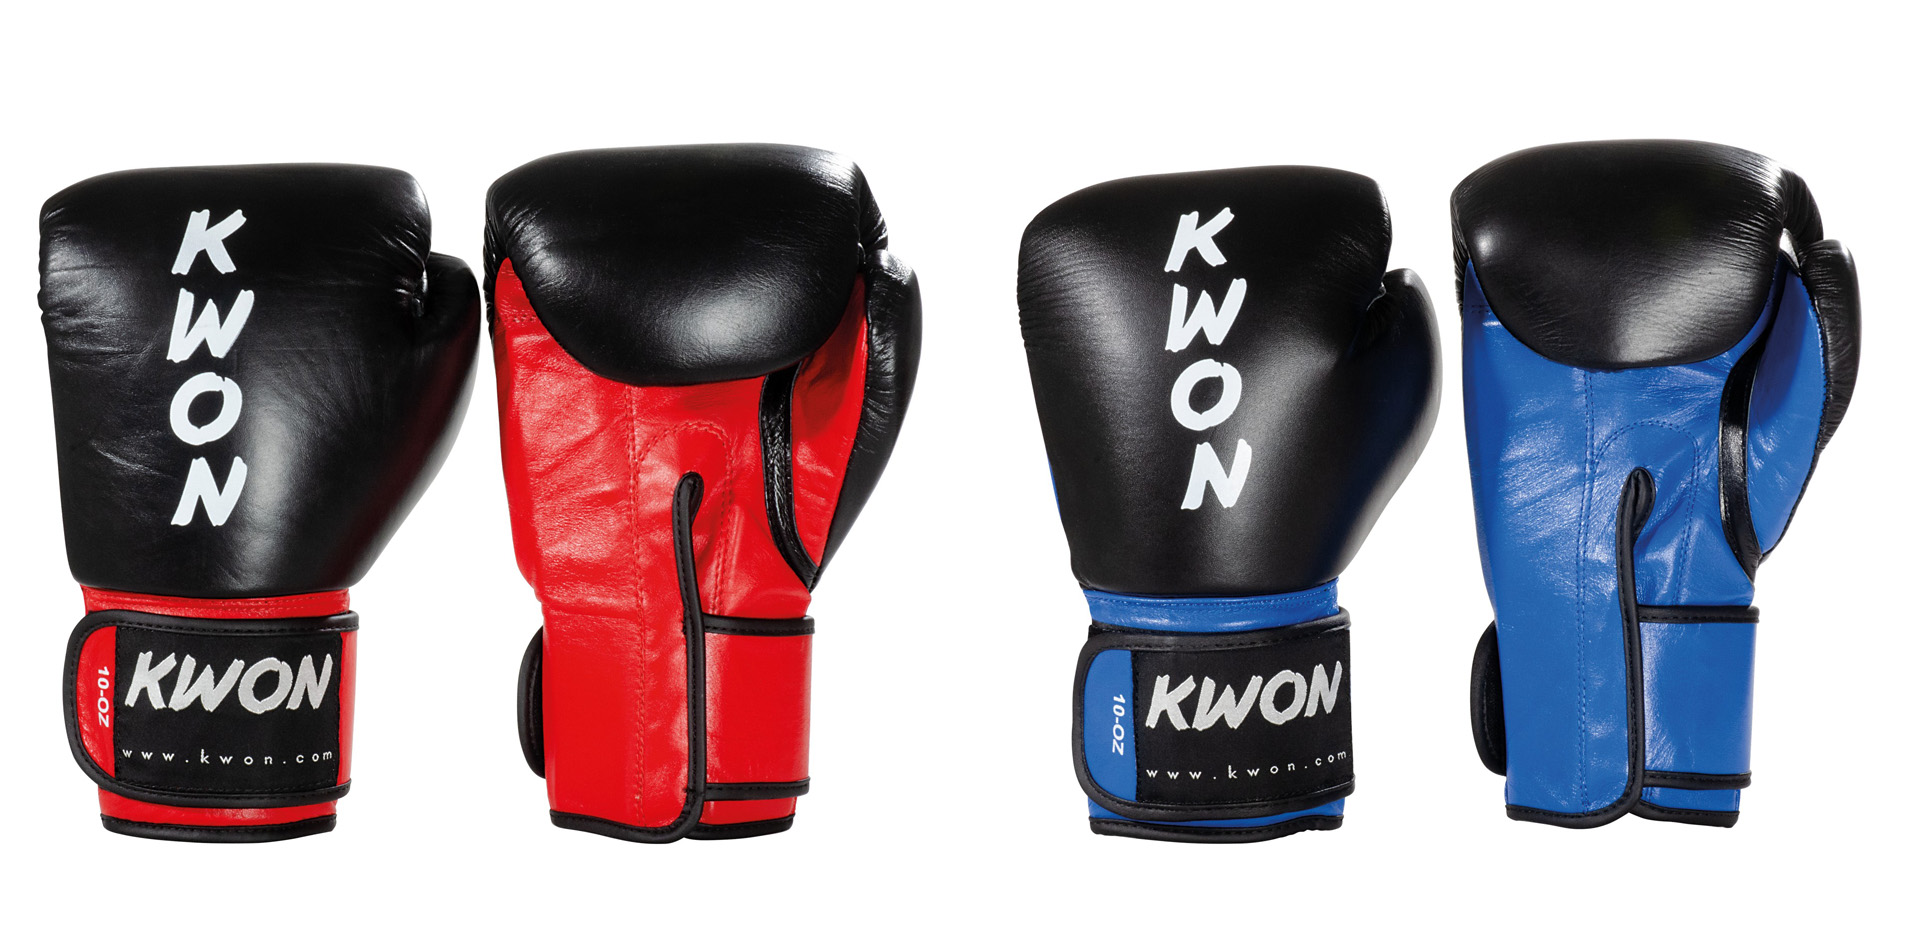 KWON Leder Kickboxhandschuhe KO | Kickboxen anerkannt Boxhandschuhe - WKU Champ